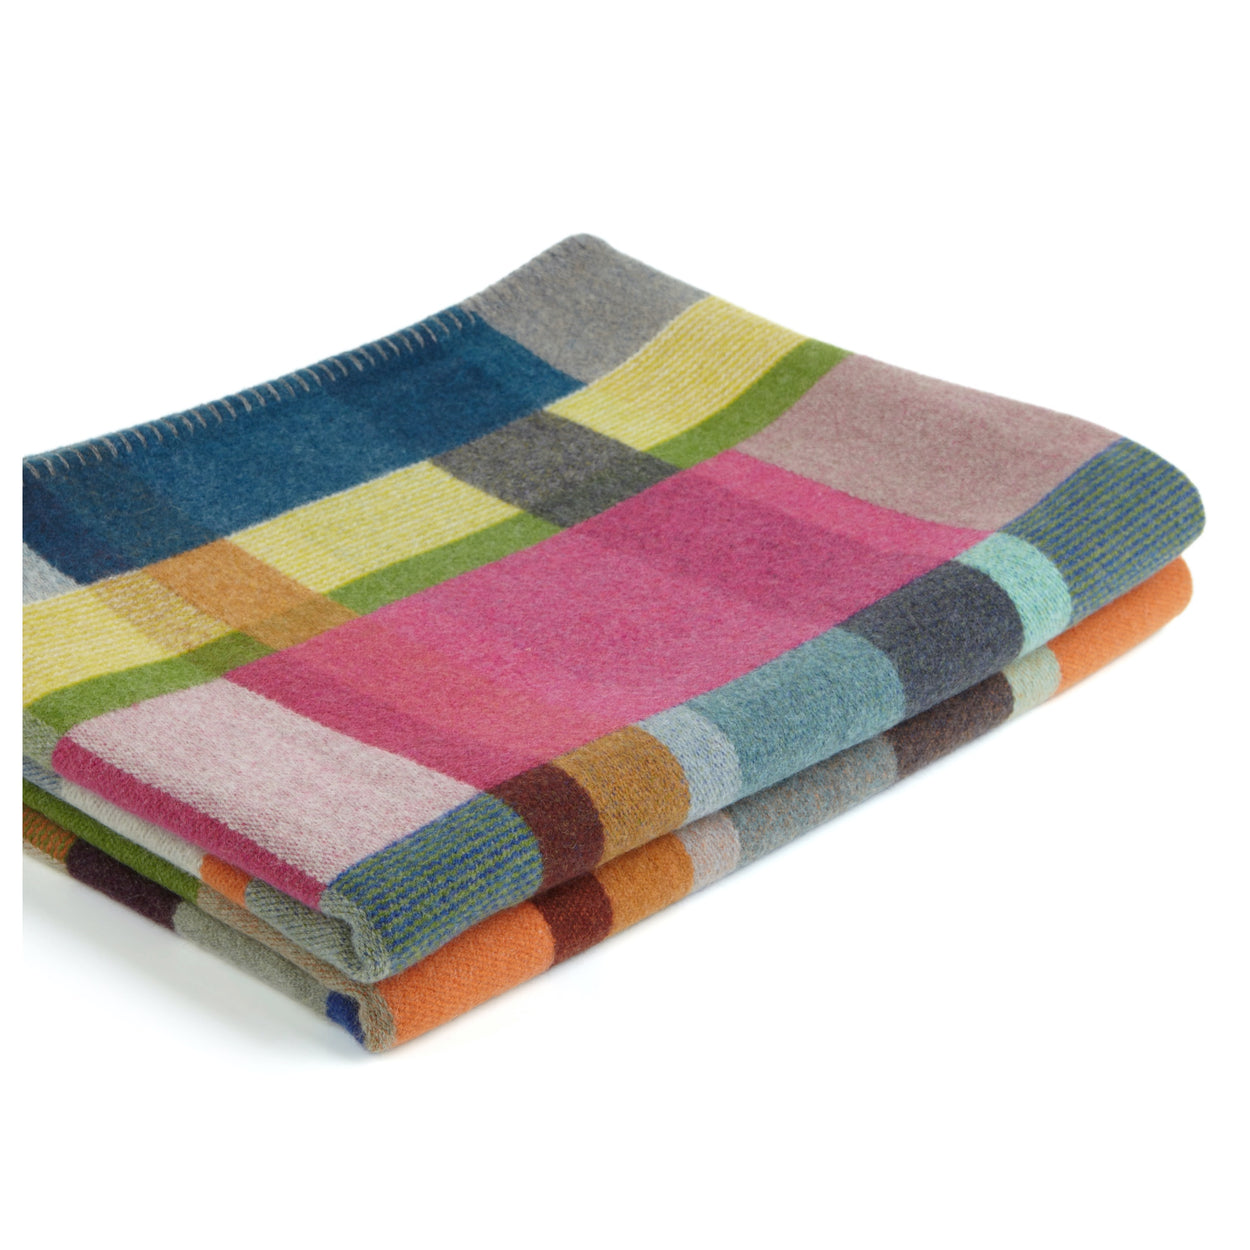 Premium Australian Merino Wool Throw Blanket in bright pink and blue folded close up